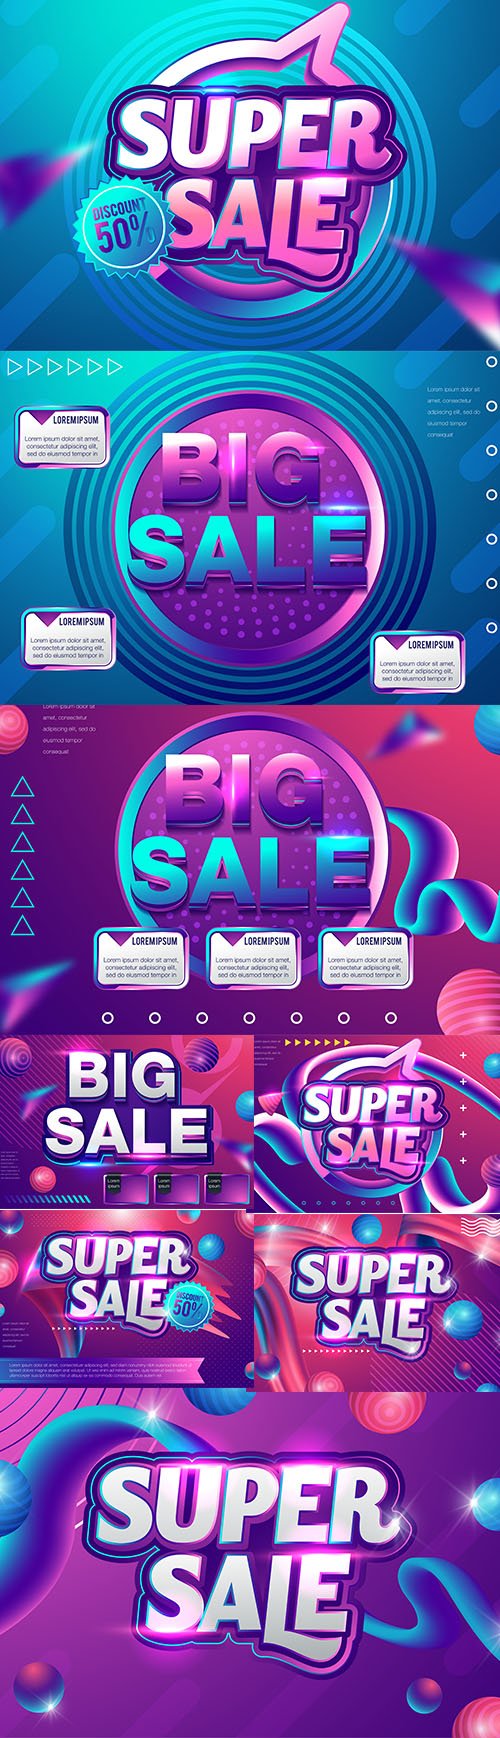 Big Sale Discoun Layout Premium Illustrations Set